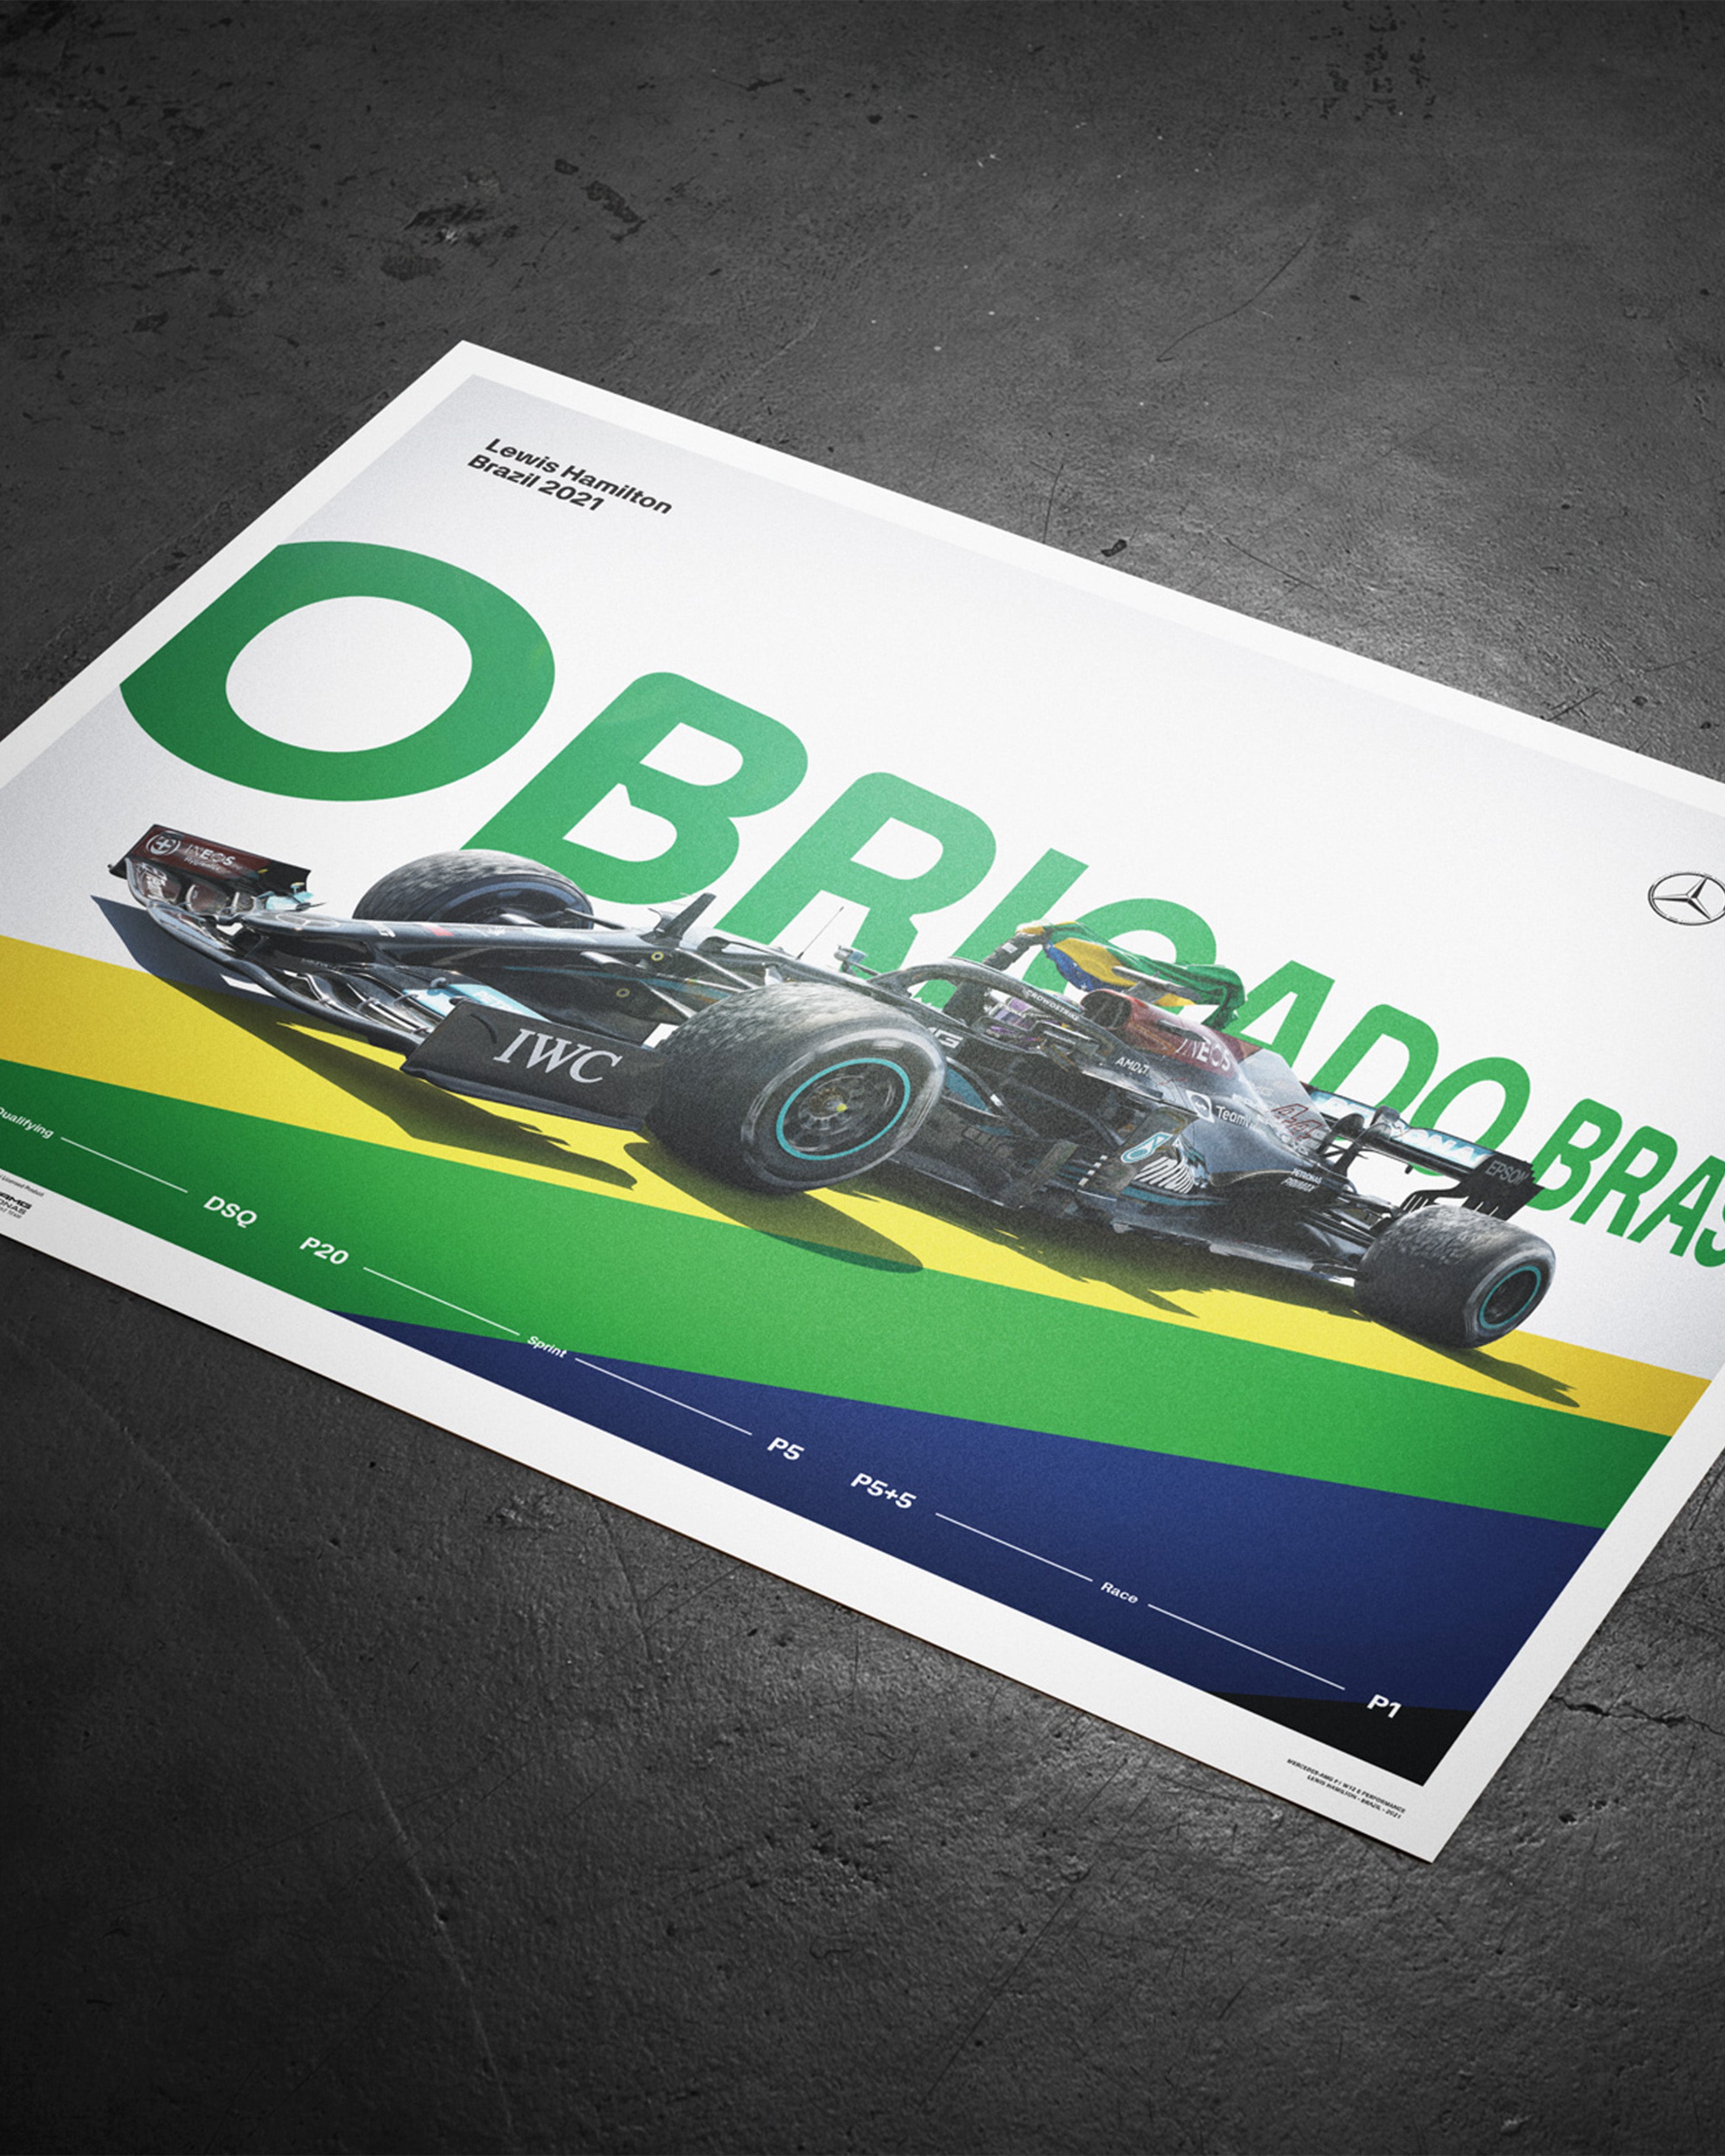 Lewis Hamilton - Obrigado Brasil Poster - 2021